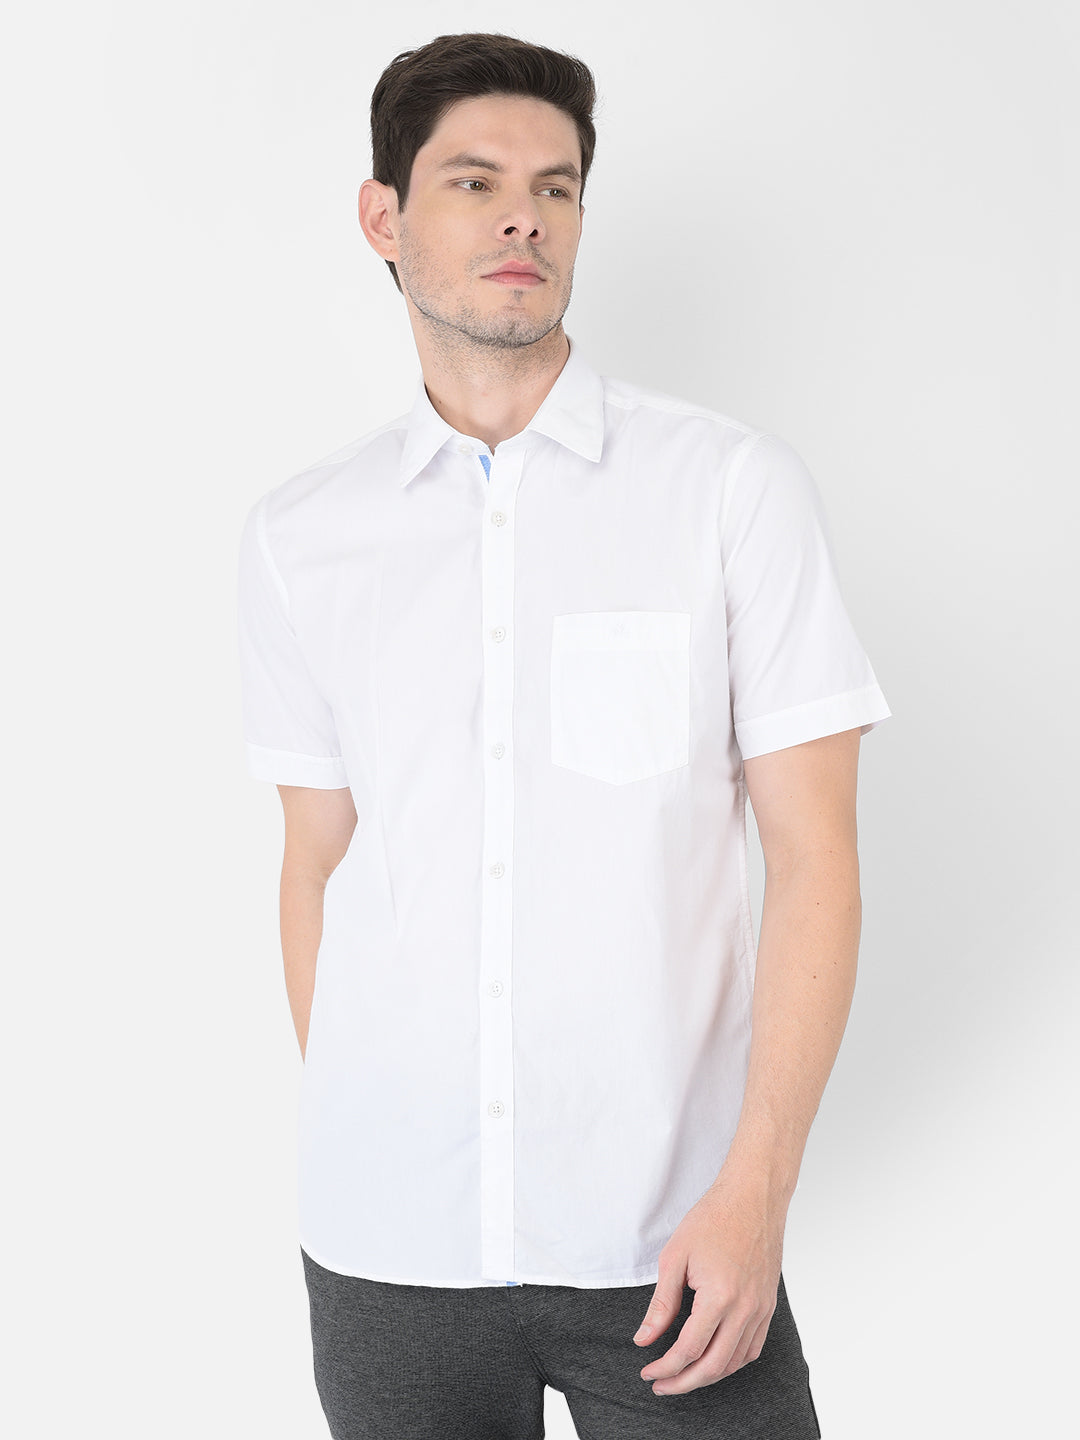 White Shirt - Men Shirts